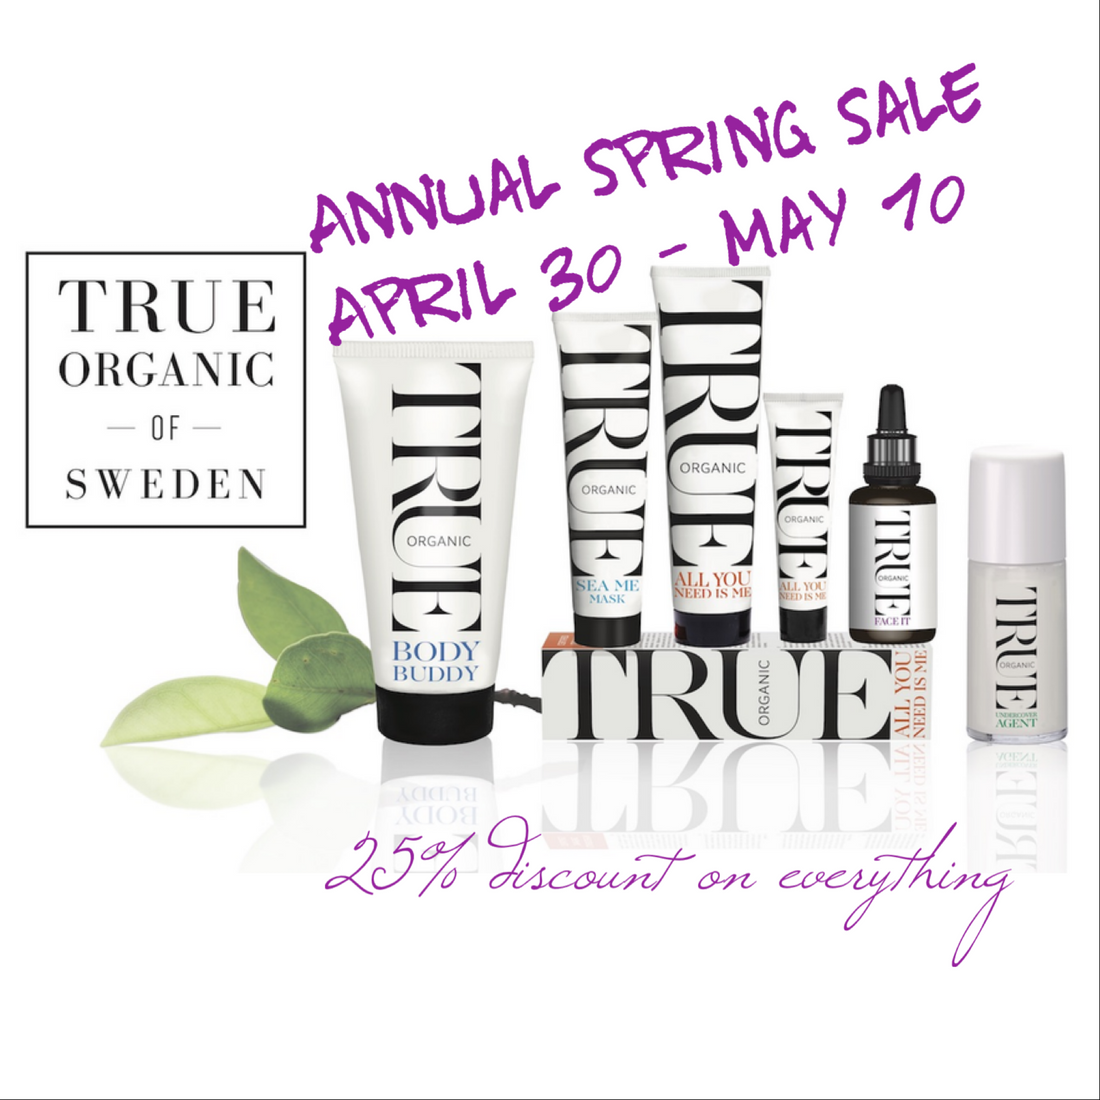 Annual Spring Sale